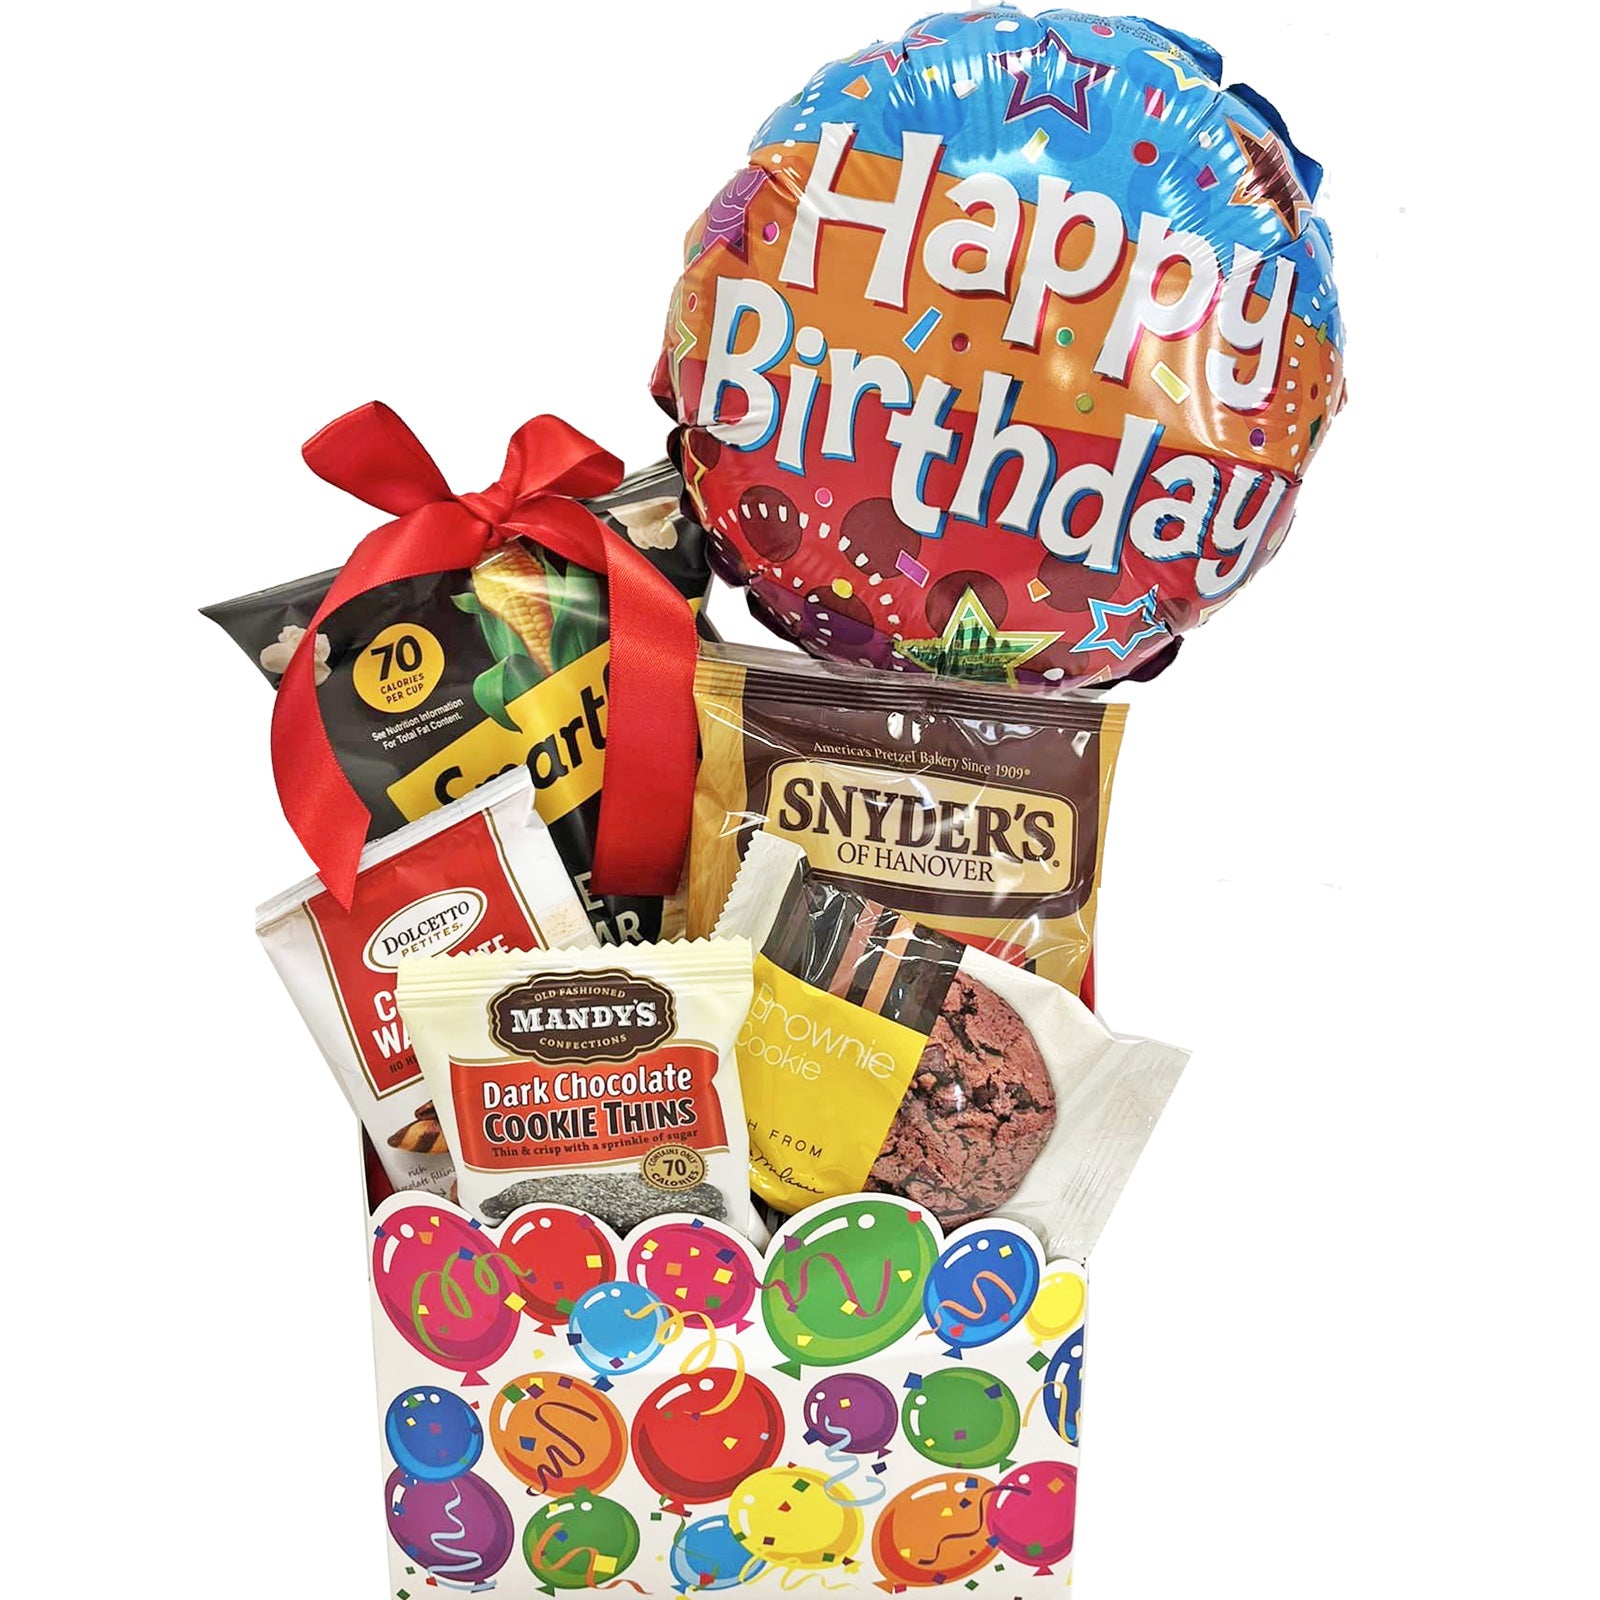 gifts for best friends birthday box | Birthday gifts for best friend, Best  friend gifts, Unique birthday gift baskets